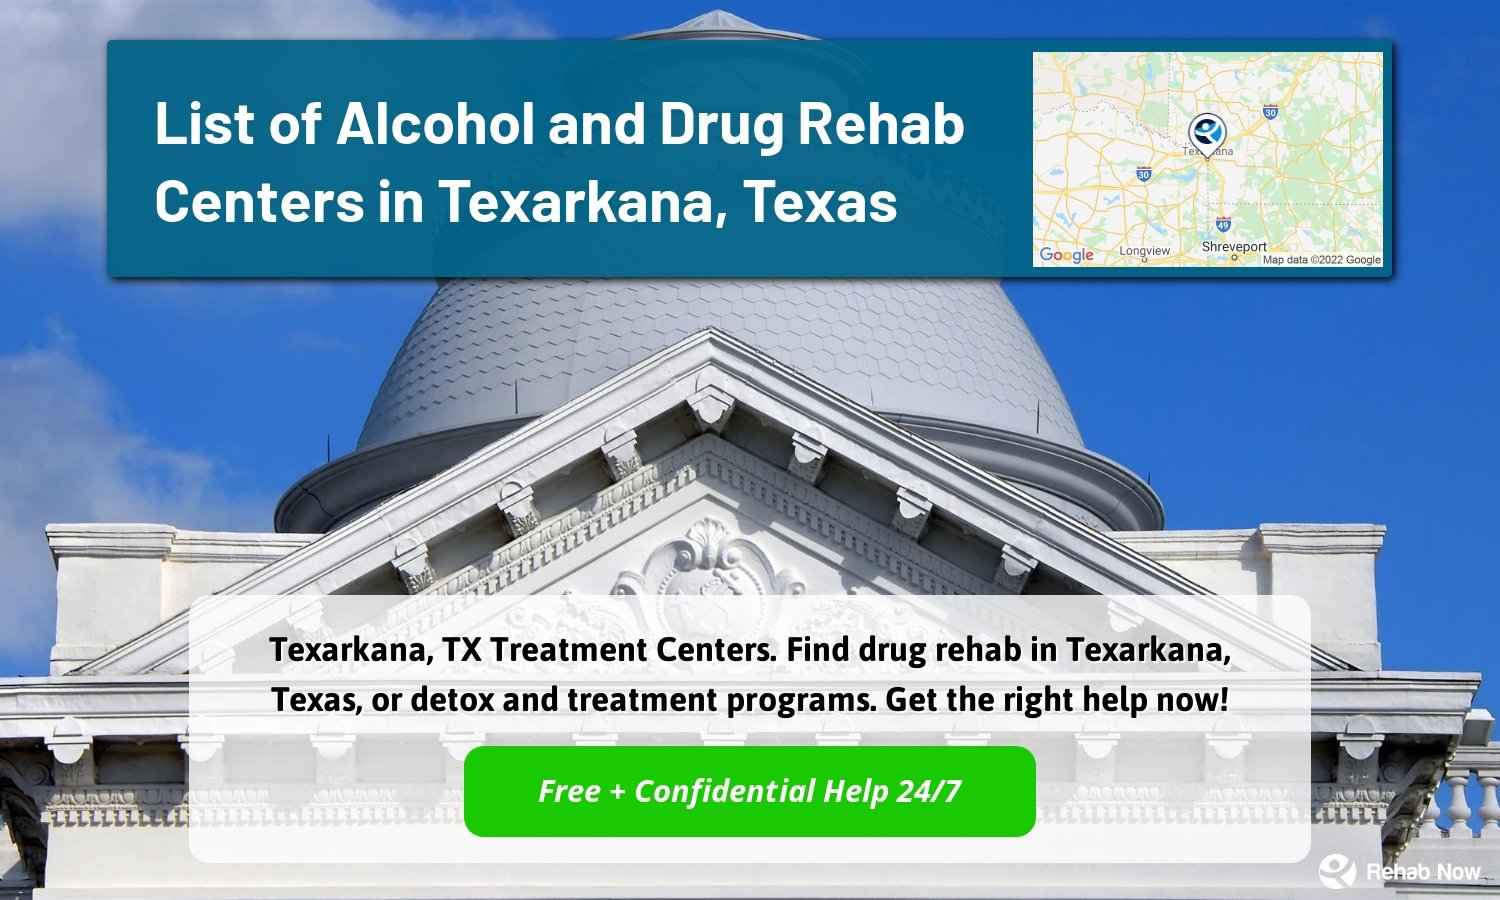 Texarkana, TX Treatment Centers. Find drug rehab in Texarkana, Texas, or detox and treatment programs. Get the right help now!